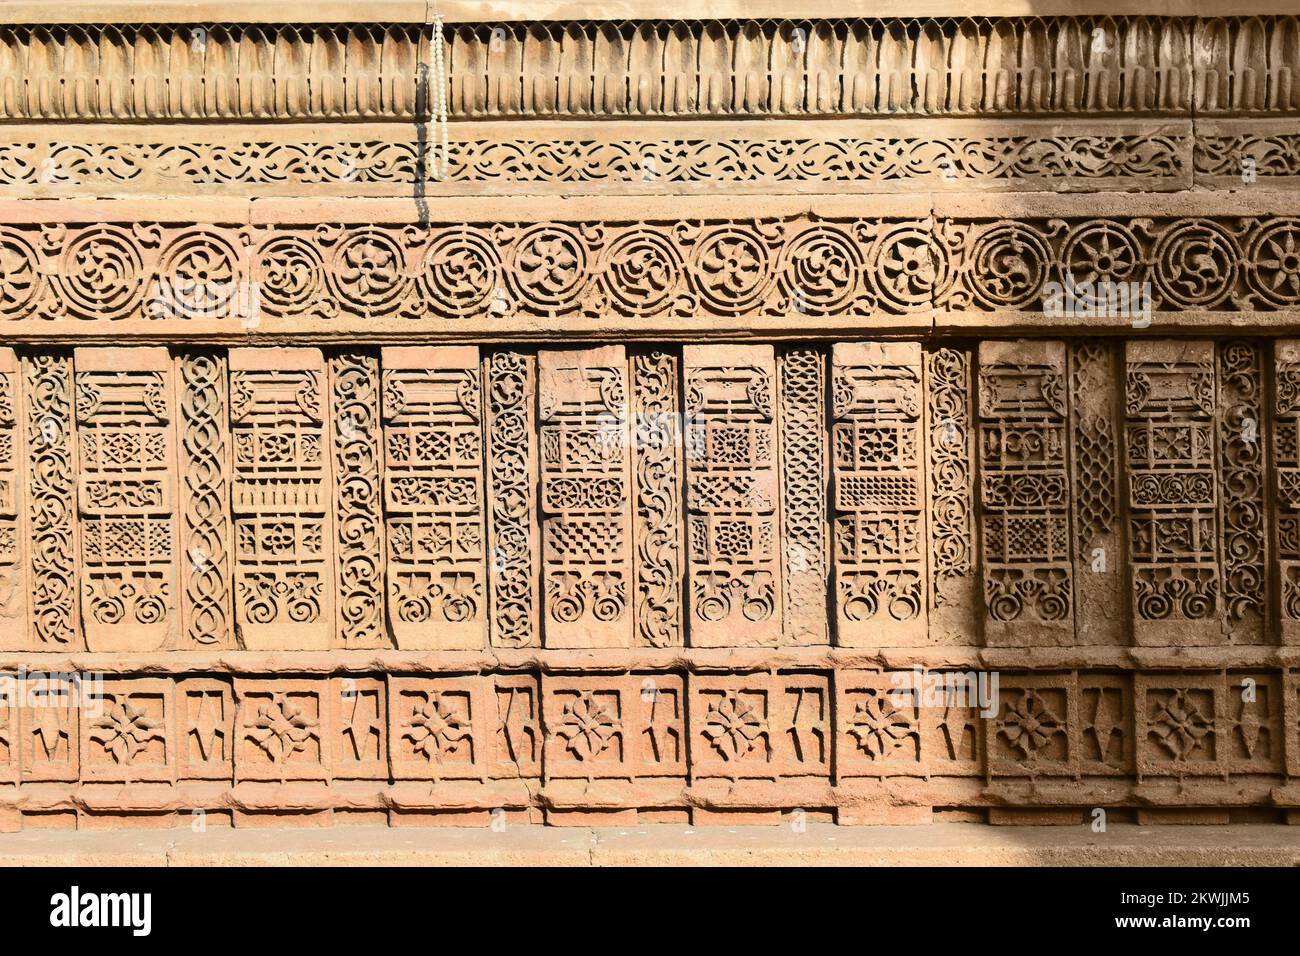 La Tumba de Rani SIPRI en Masjid-e-nagina, pared exterior detalles tallados en piedra, arquitectura islámica, construida en A.H. 920 (1514 d.C.) por Rani Sabrai durante t Foto de stock